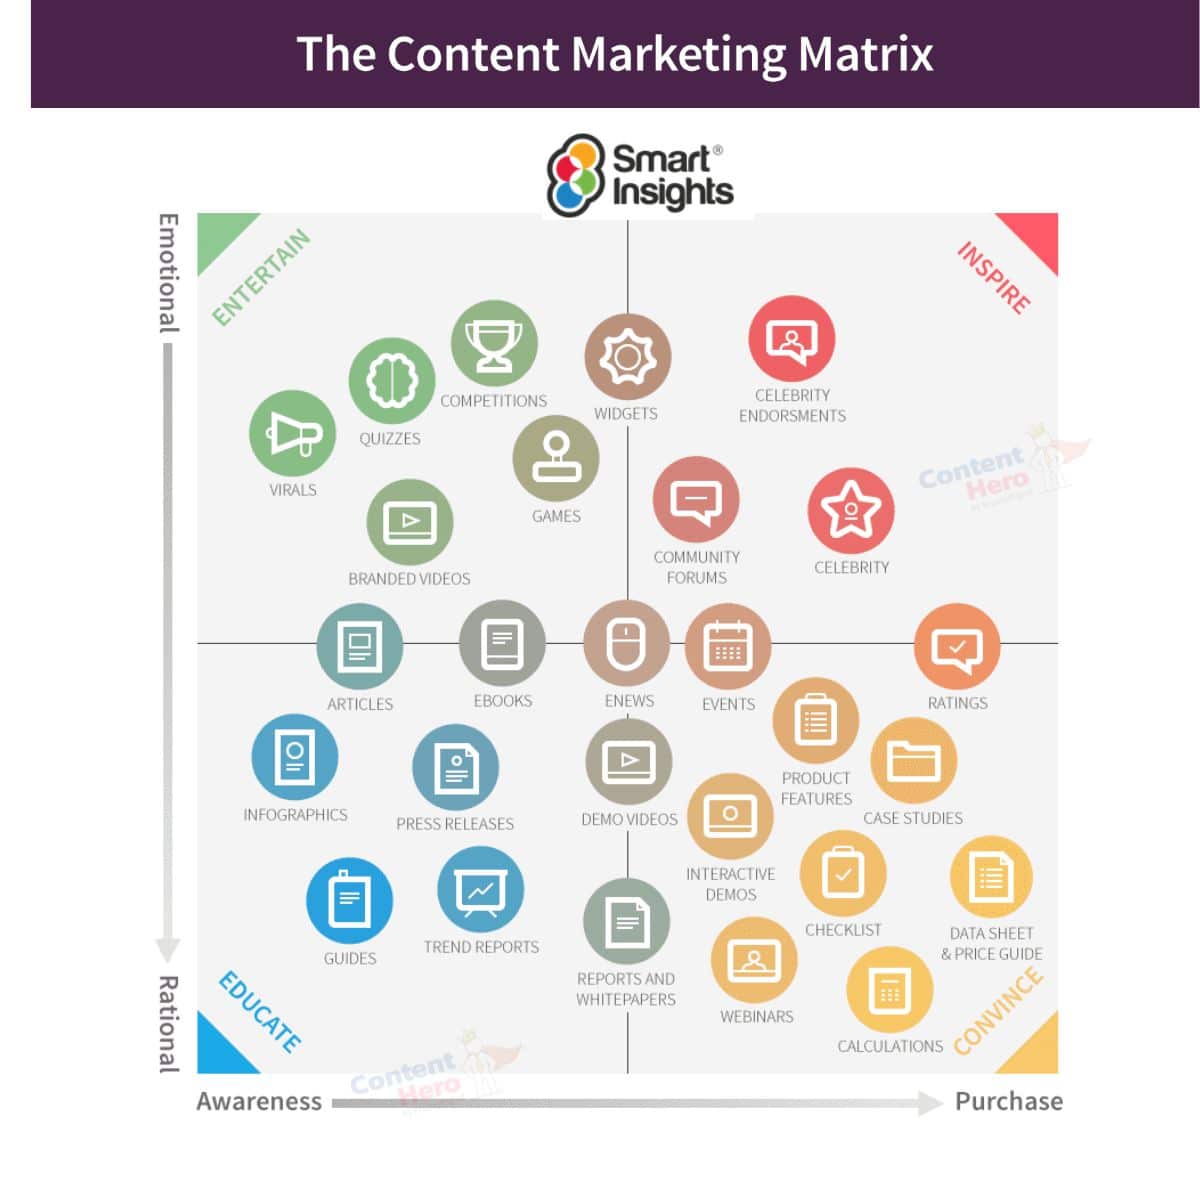 Content Marketing Matrix by Smartinsights